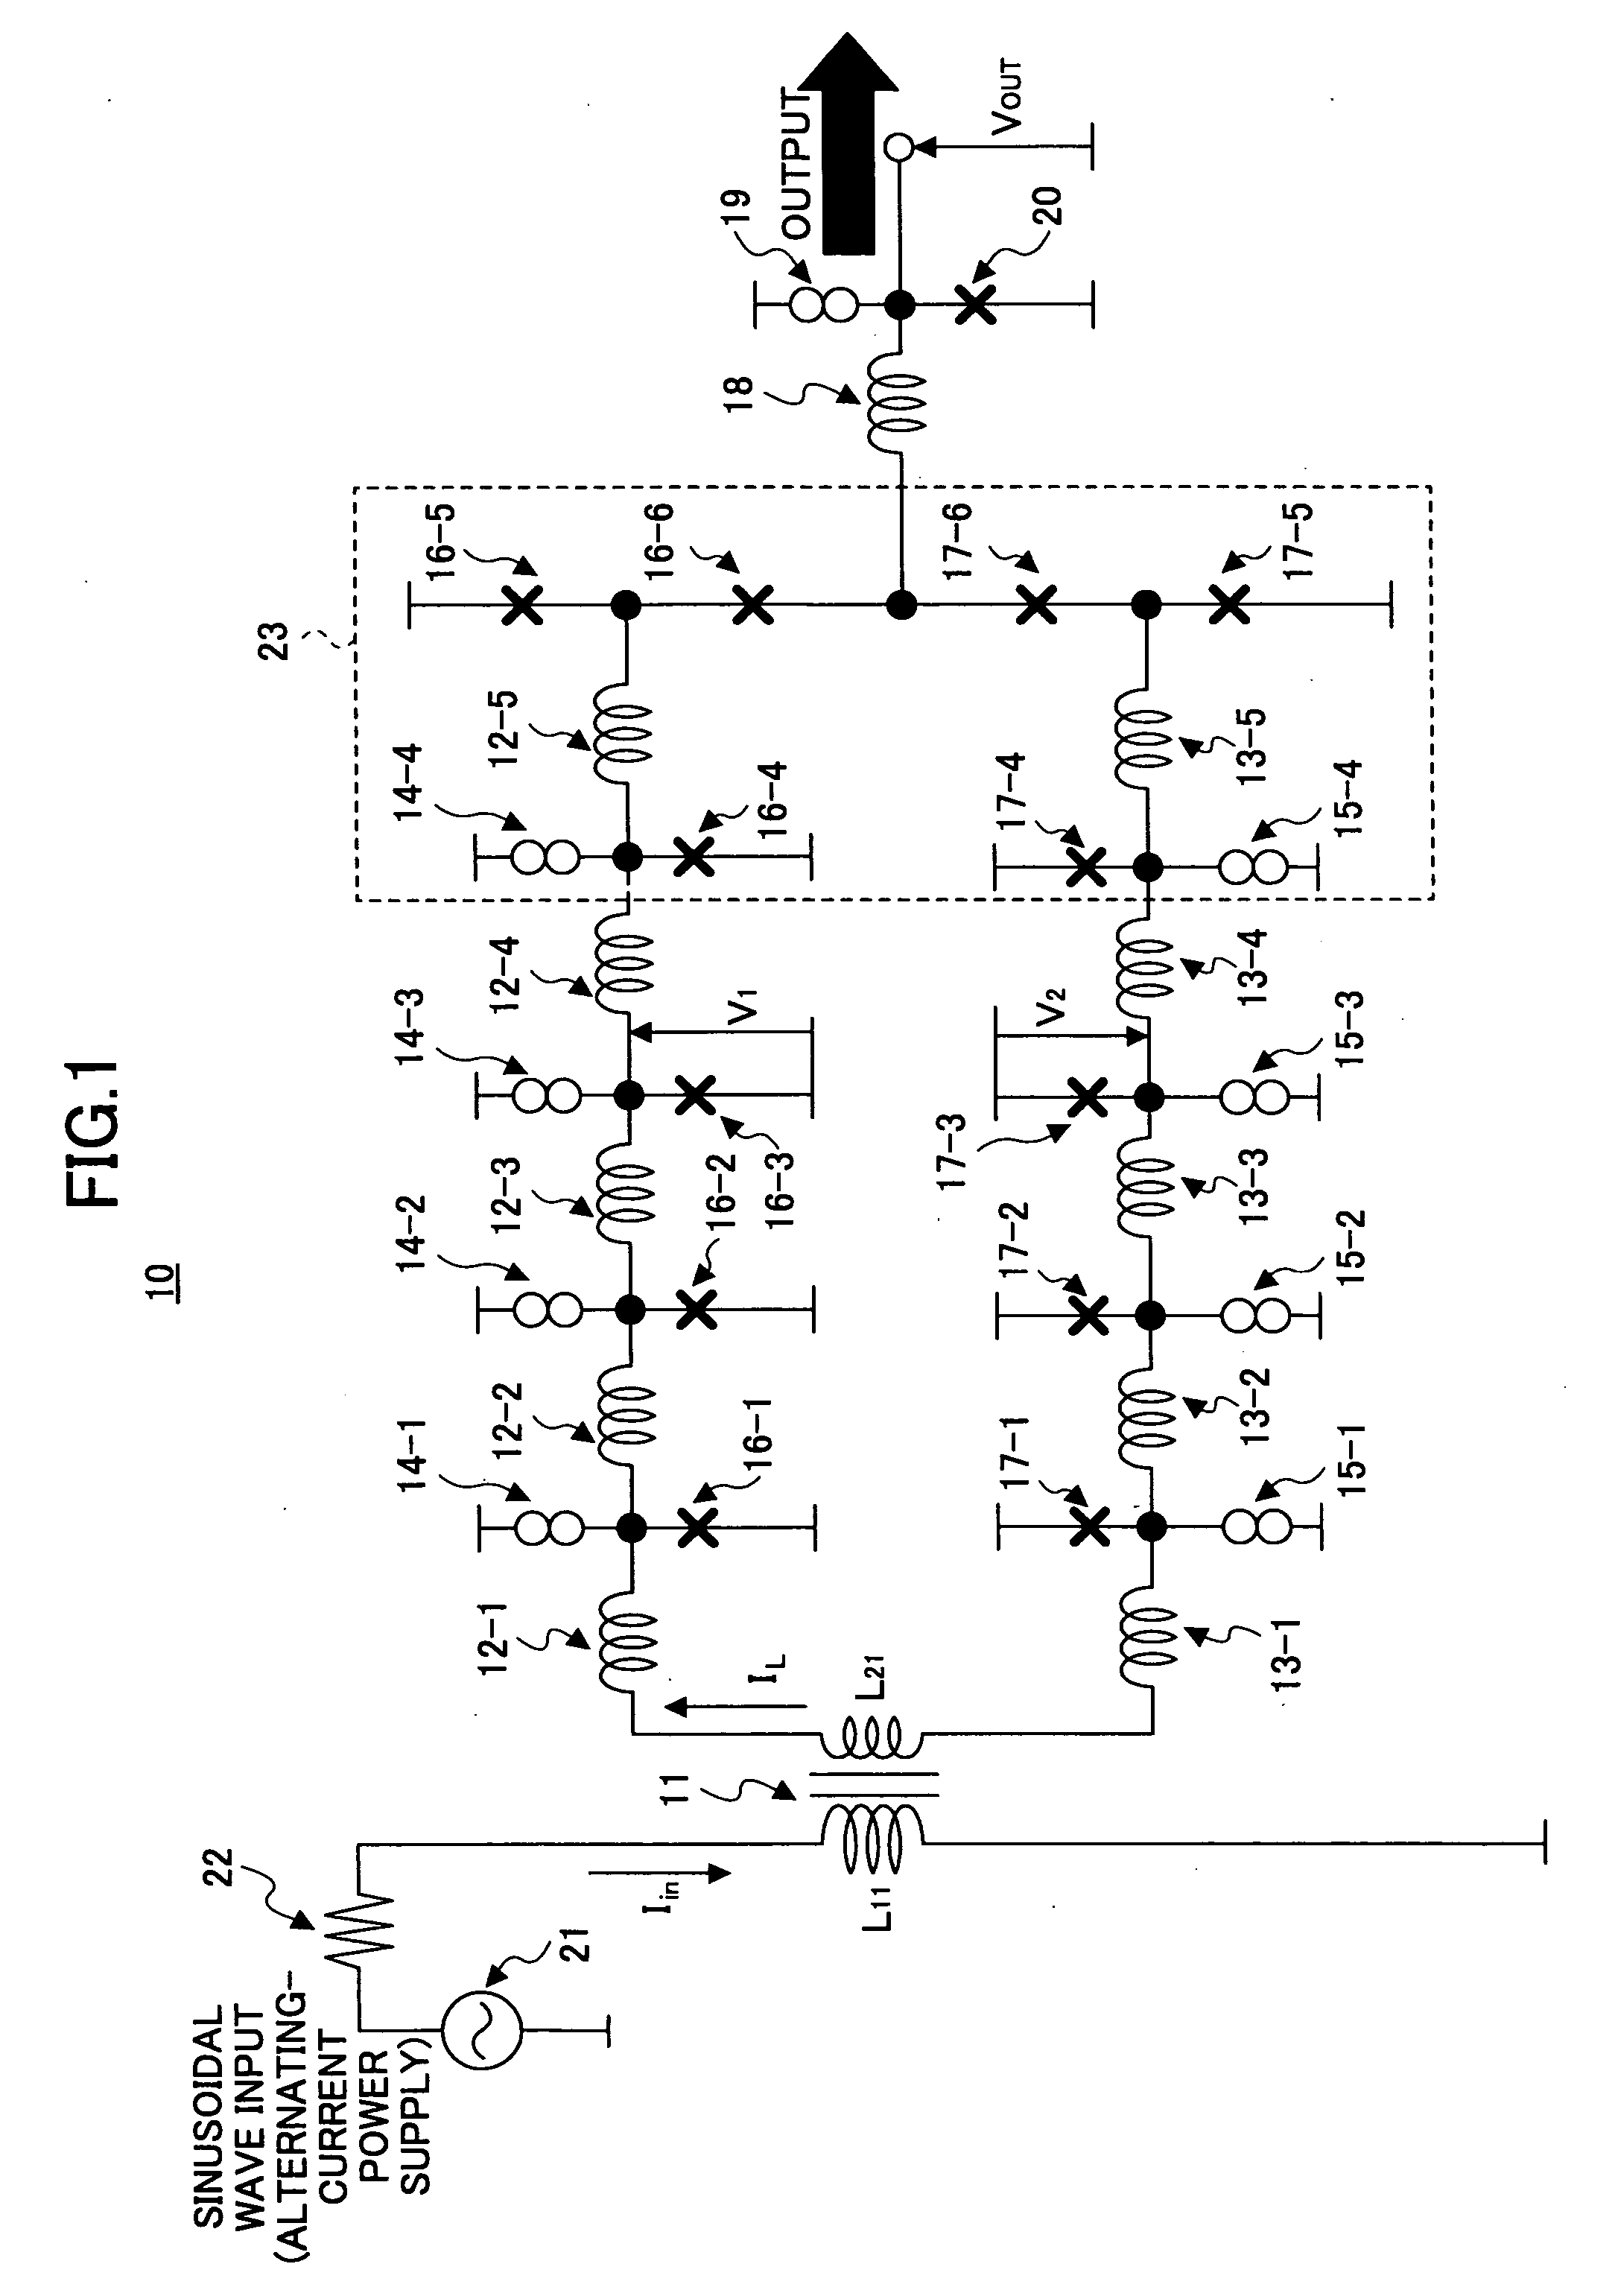 Superconducting circuit for generating pulse signal